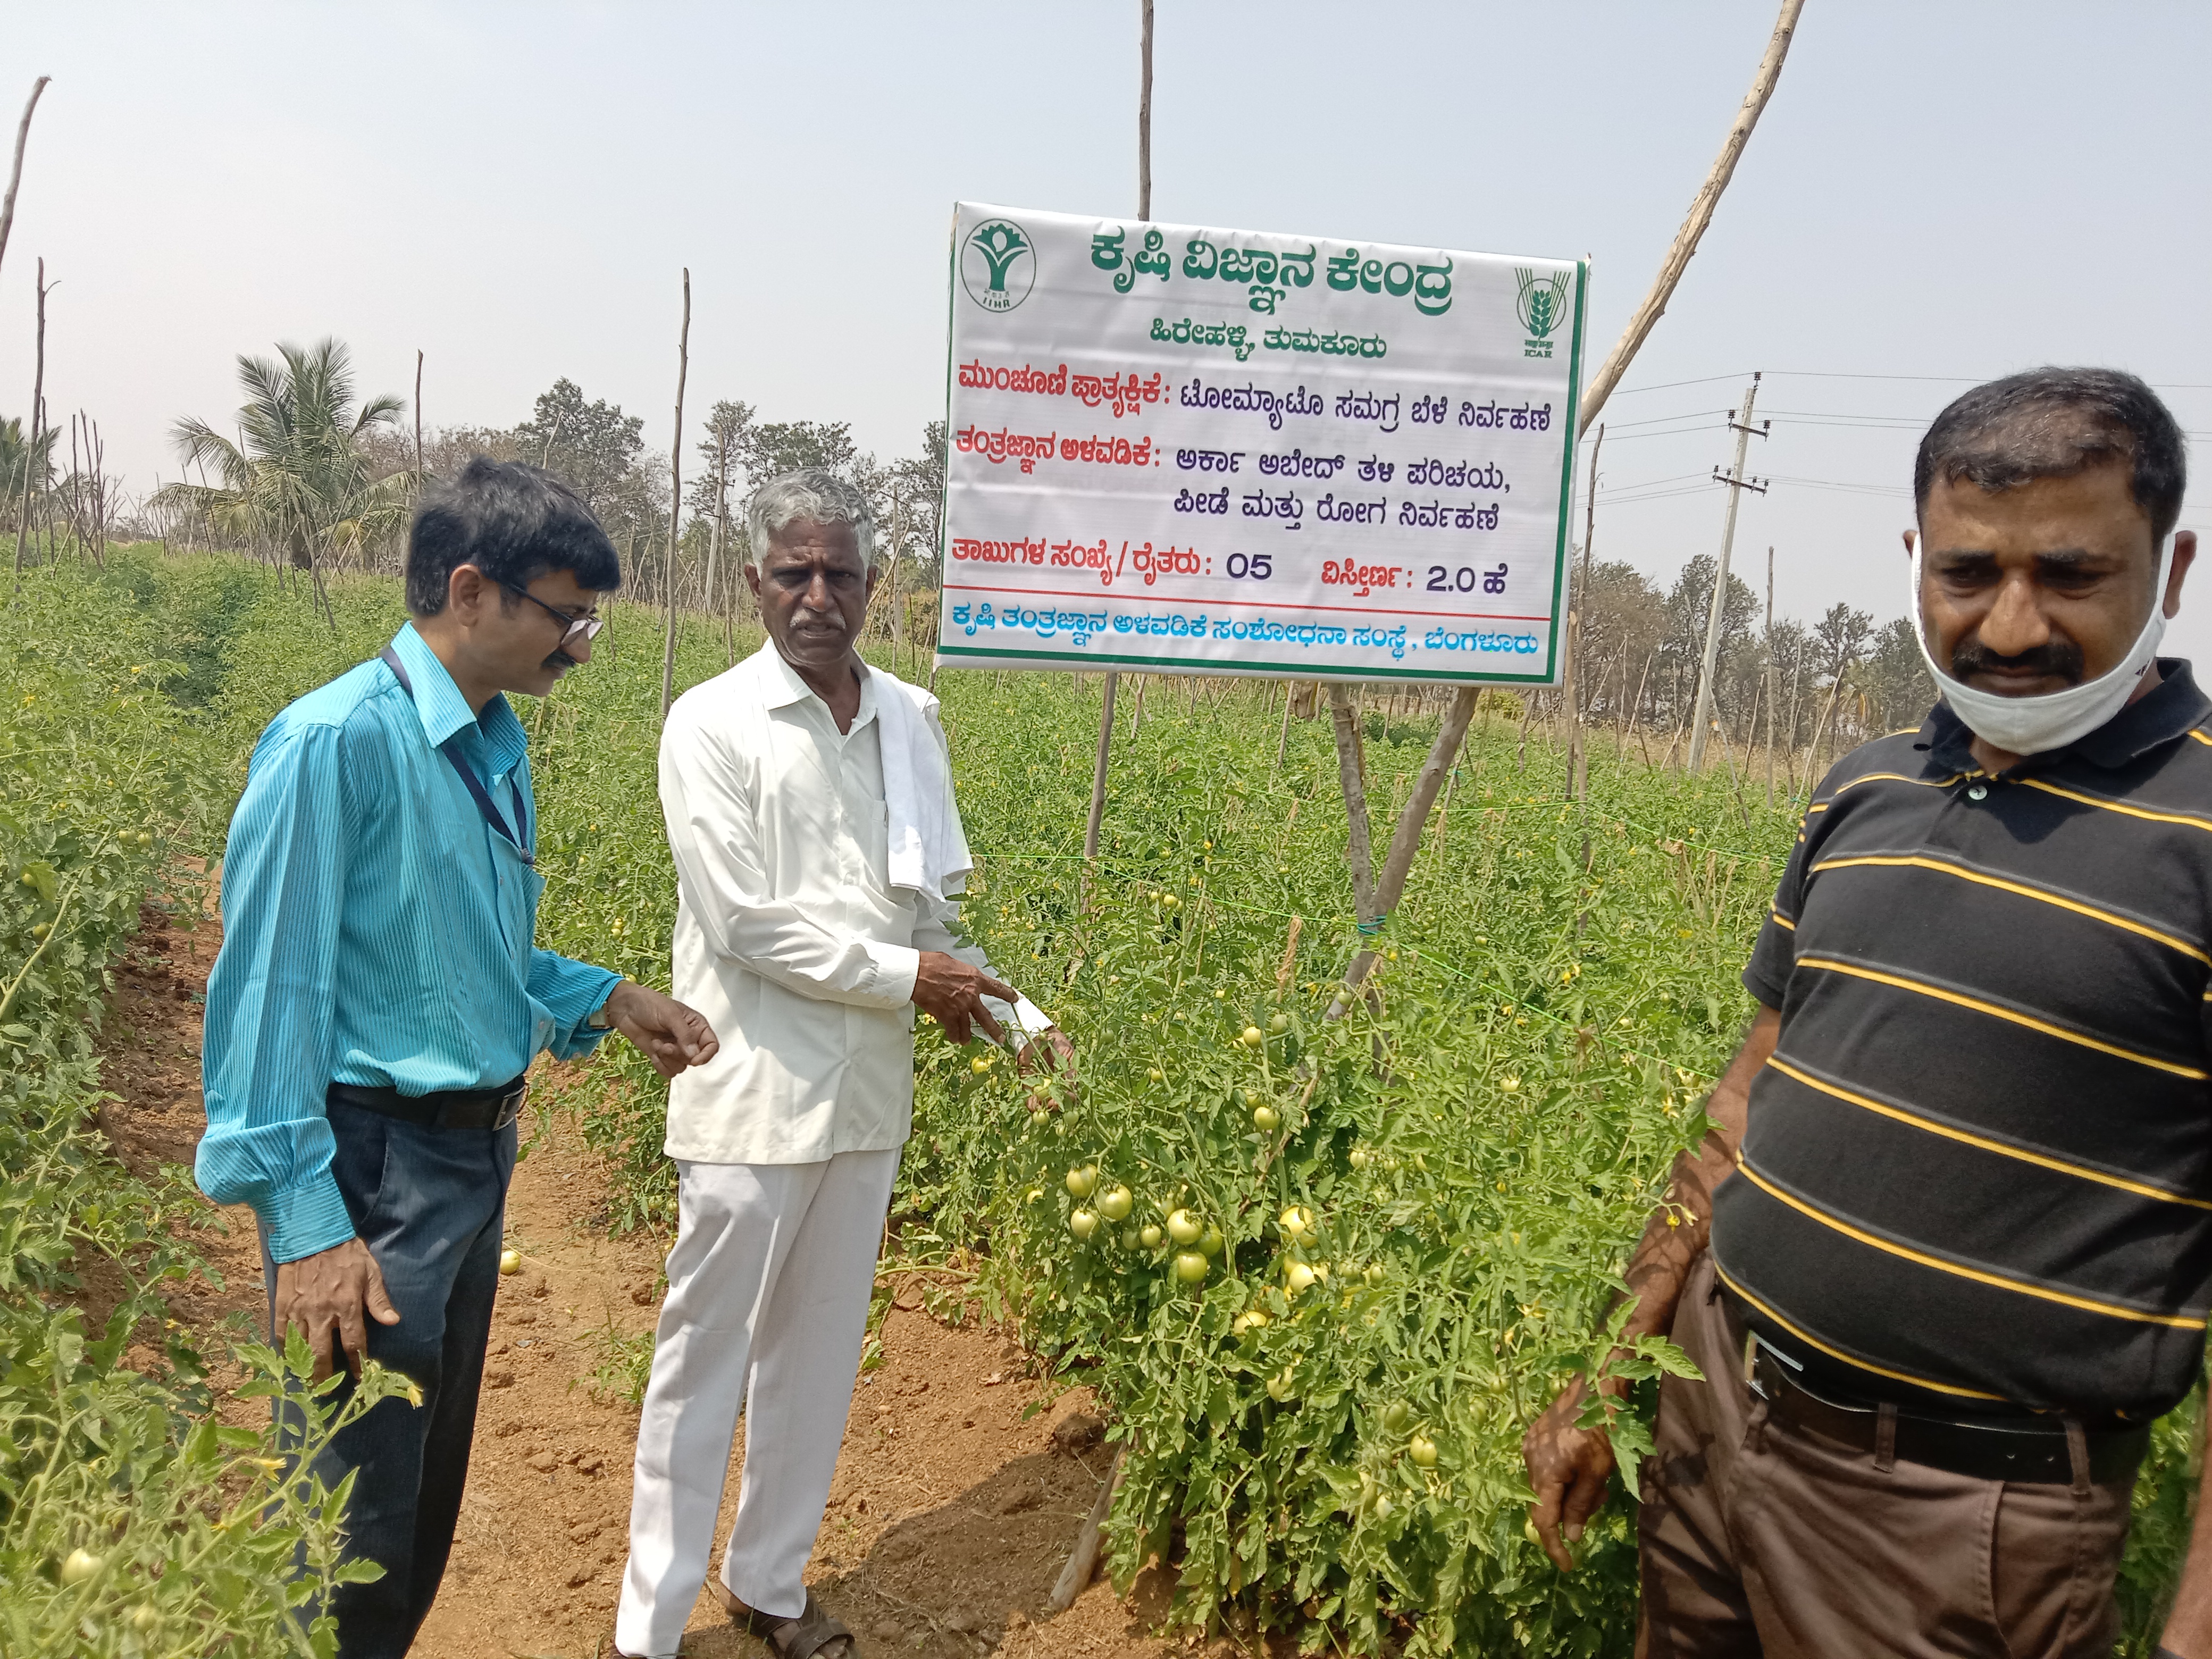 Field visit to Tomato at Pallavalli village of Pavagada